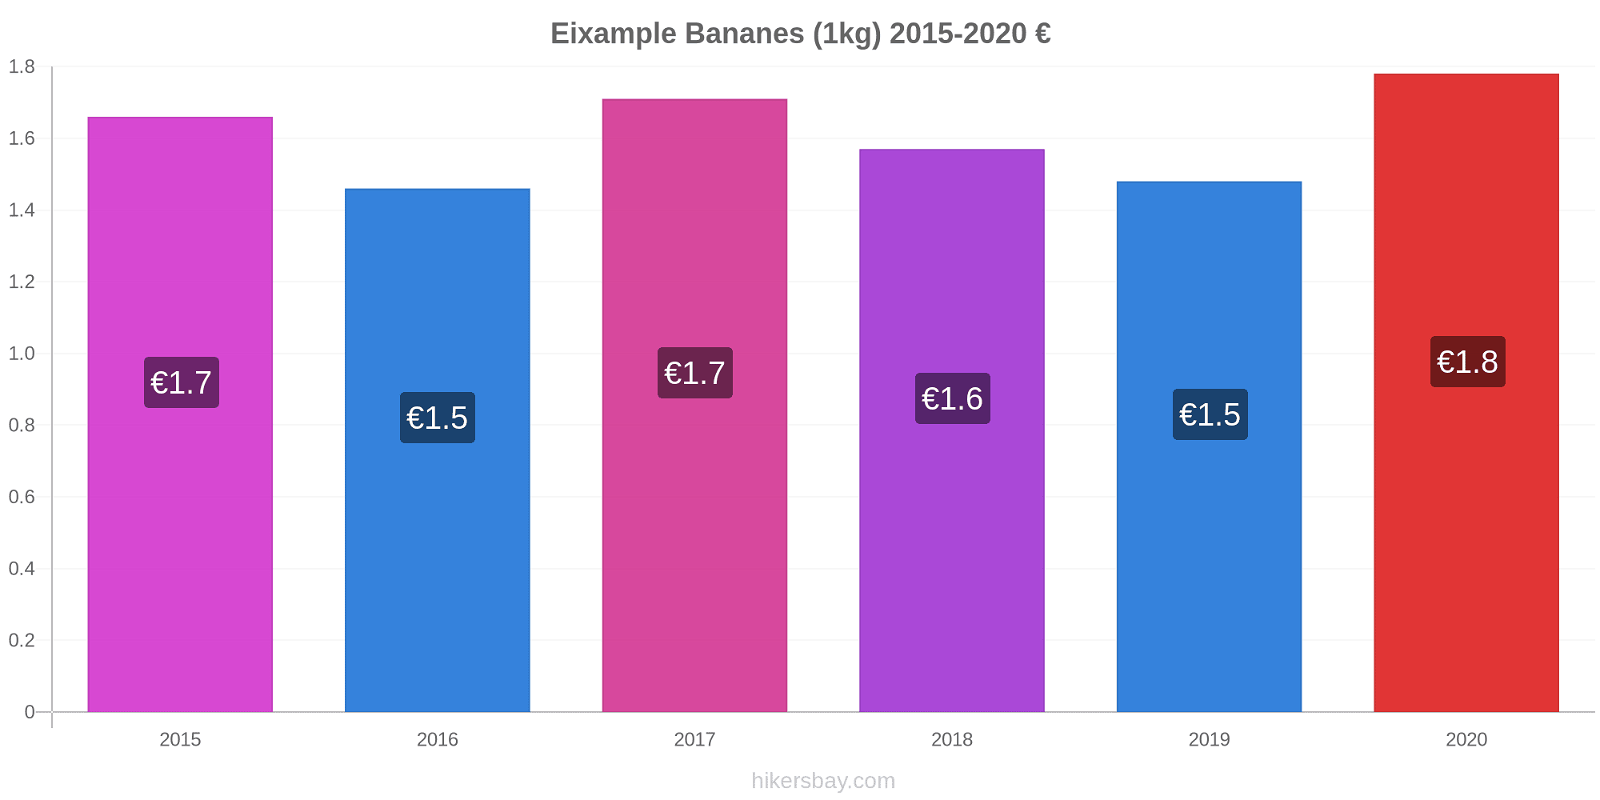 Eixample changements de prix Bananes (1kg) hikersbay.com